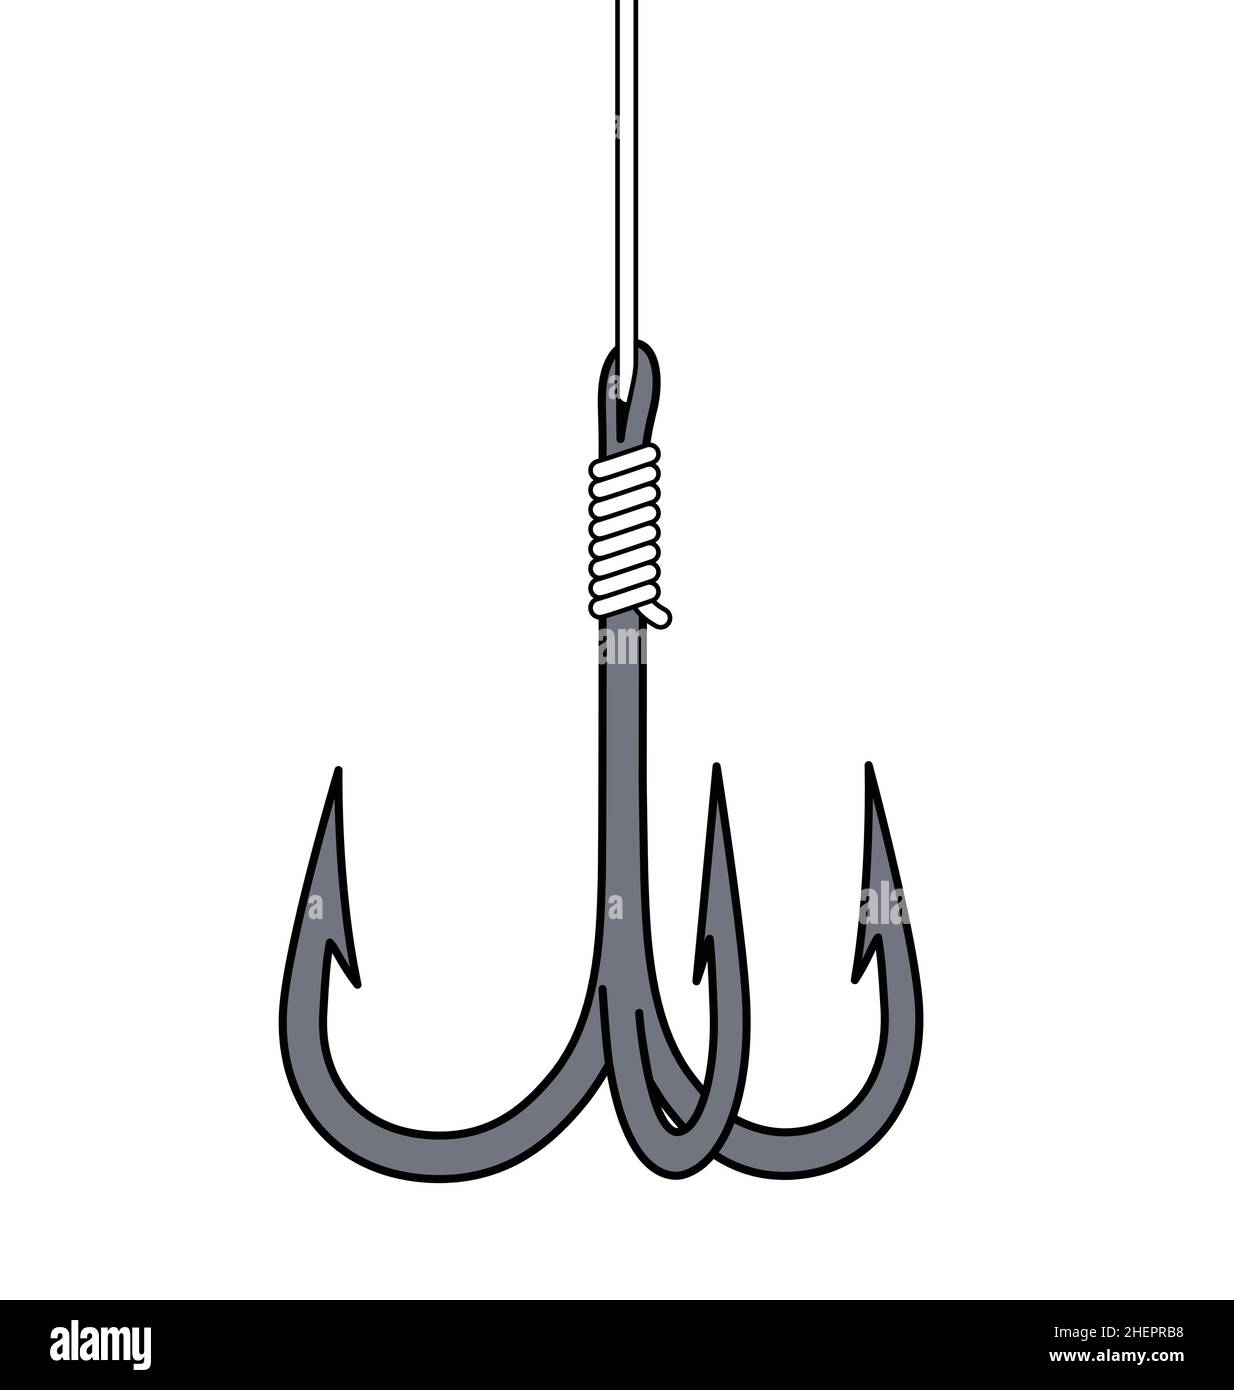 simple triple tri 3 fishing fish hook with line string grey metal